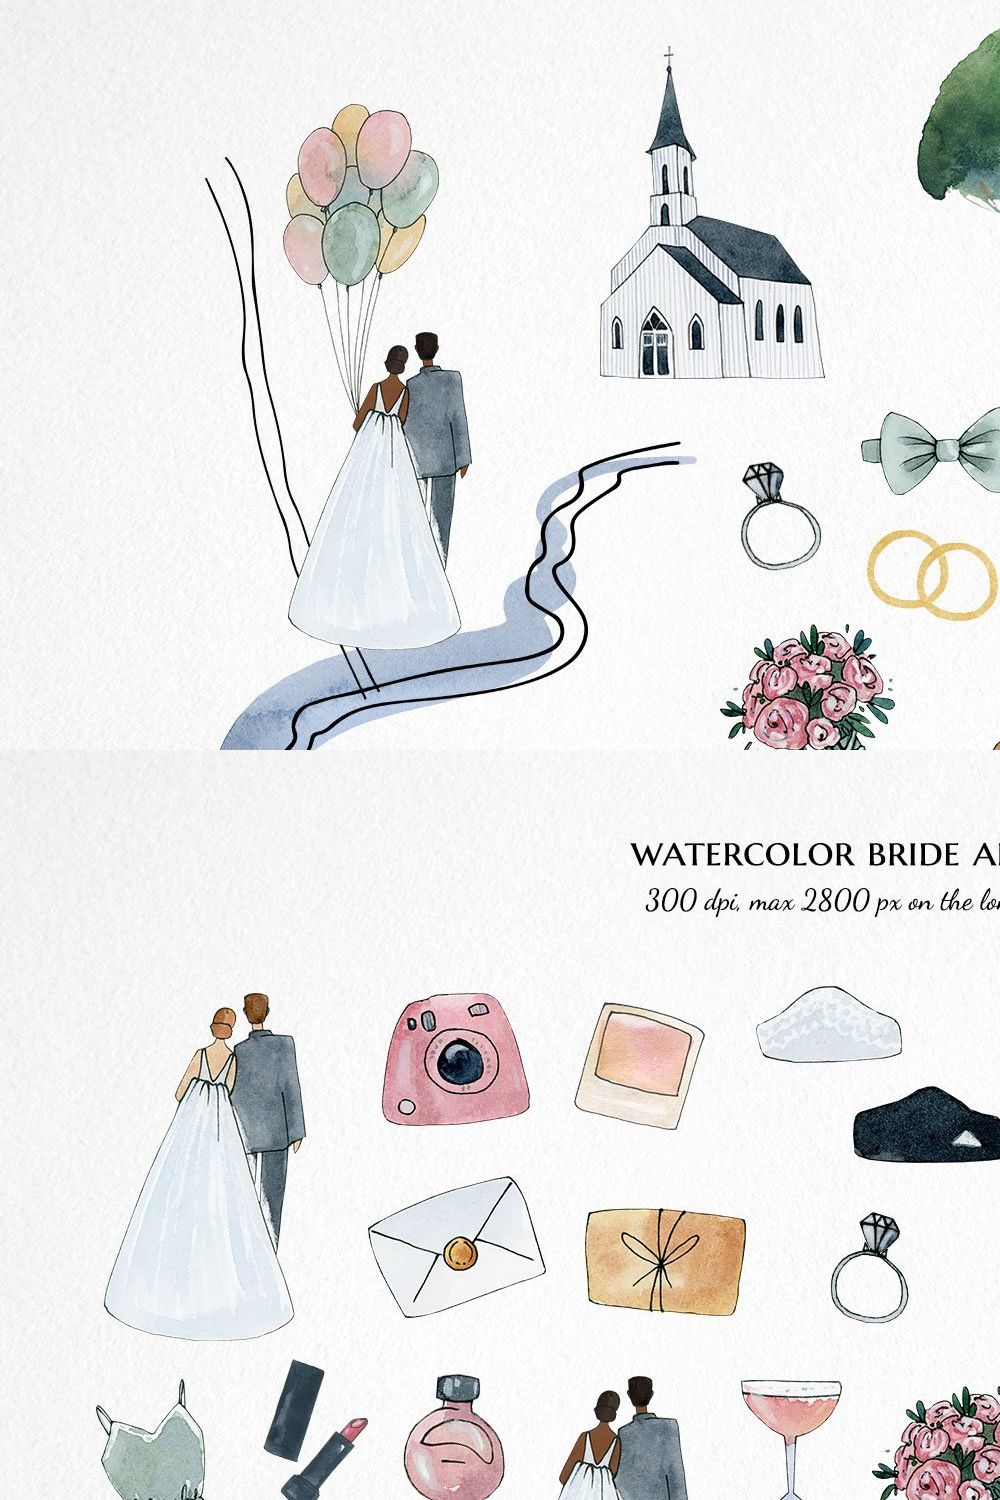 watercolor wedding bride clipart pinterest preview image.